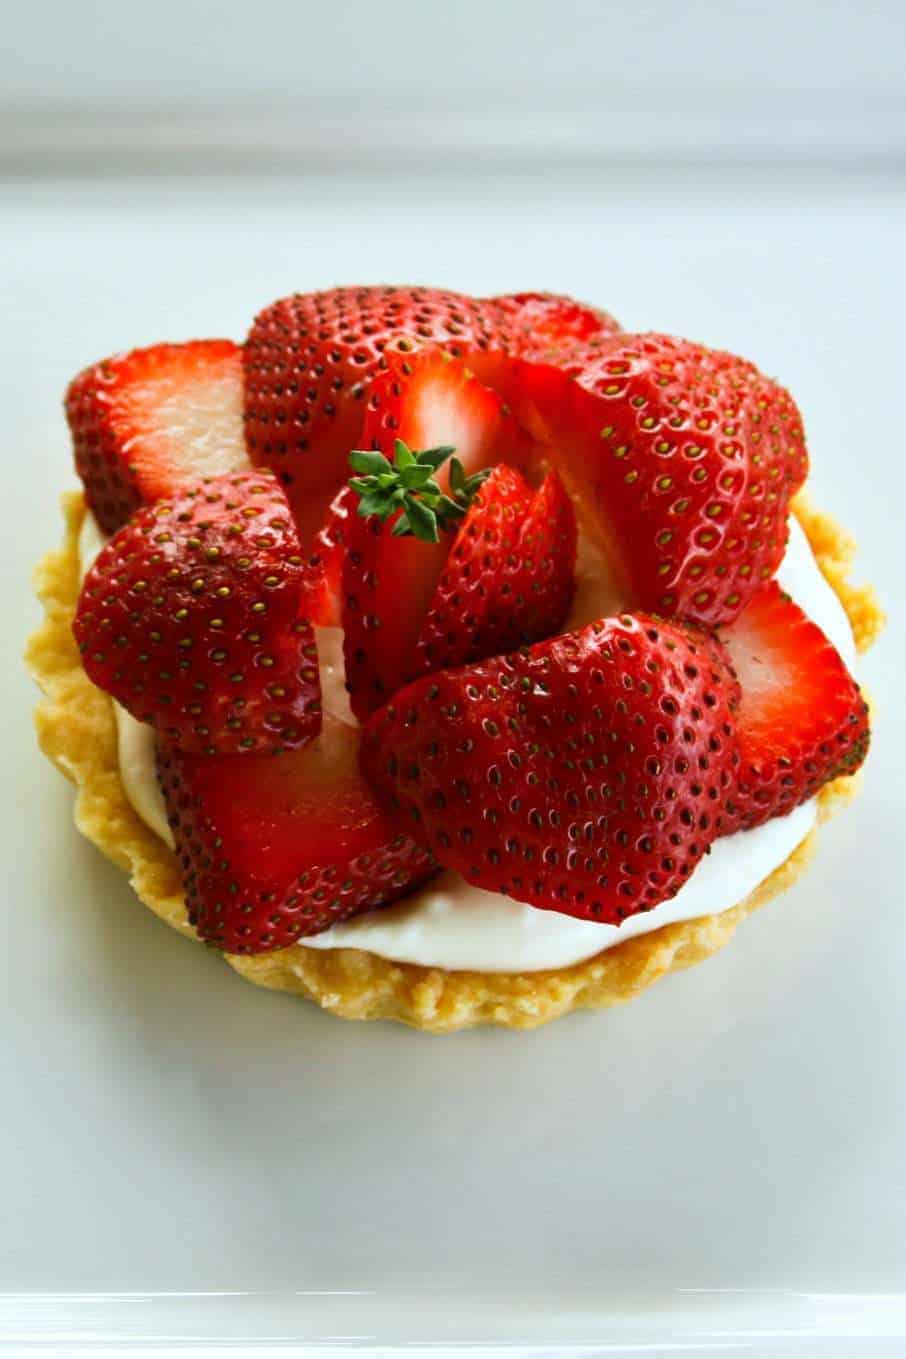 Fresh strawberries on a creamy, mascarpone bed in a tart shell.one